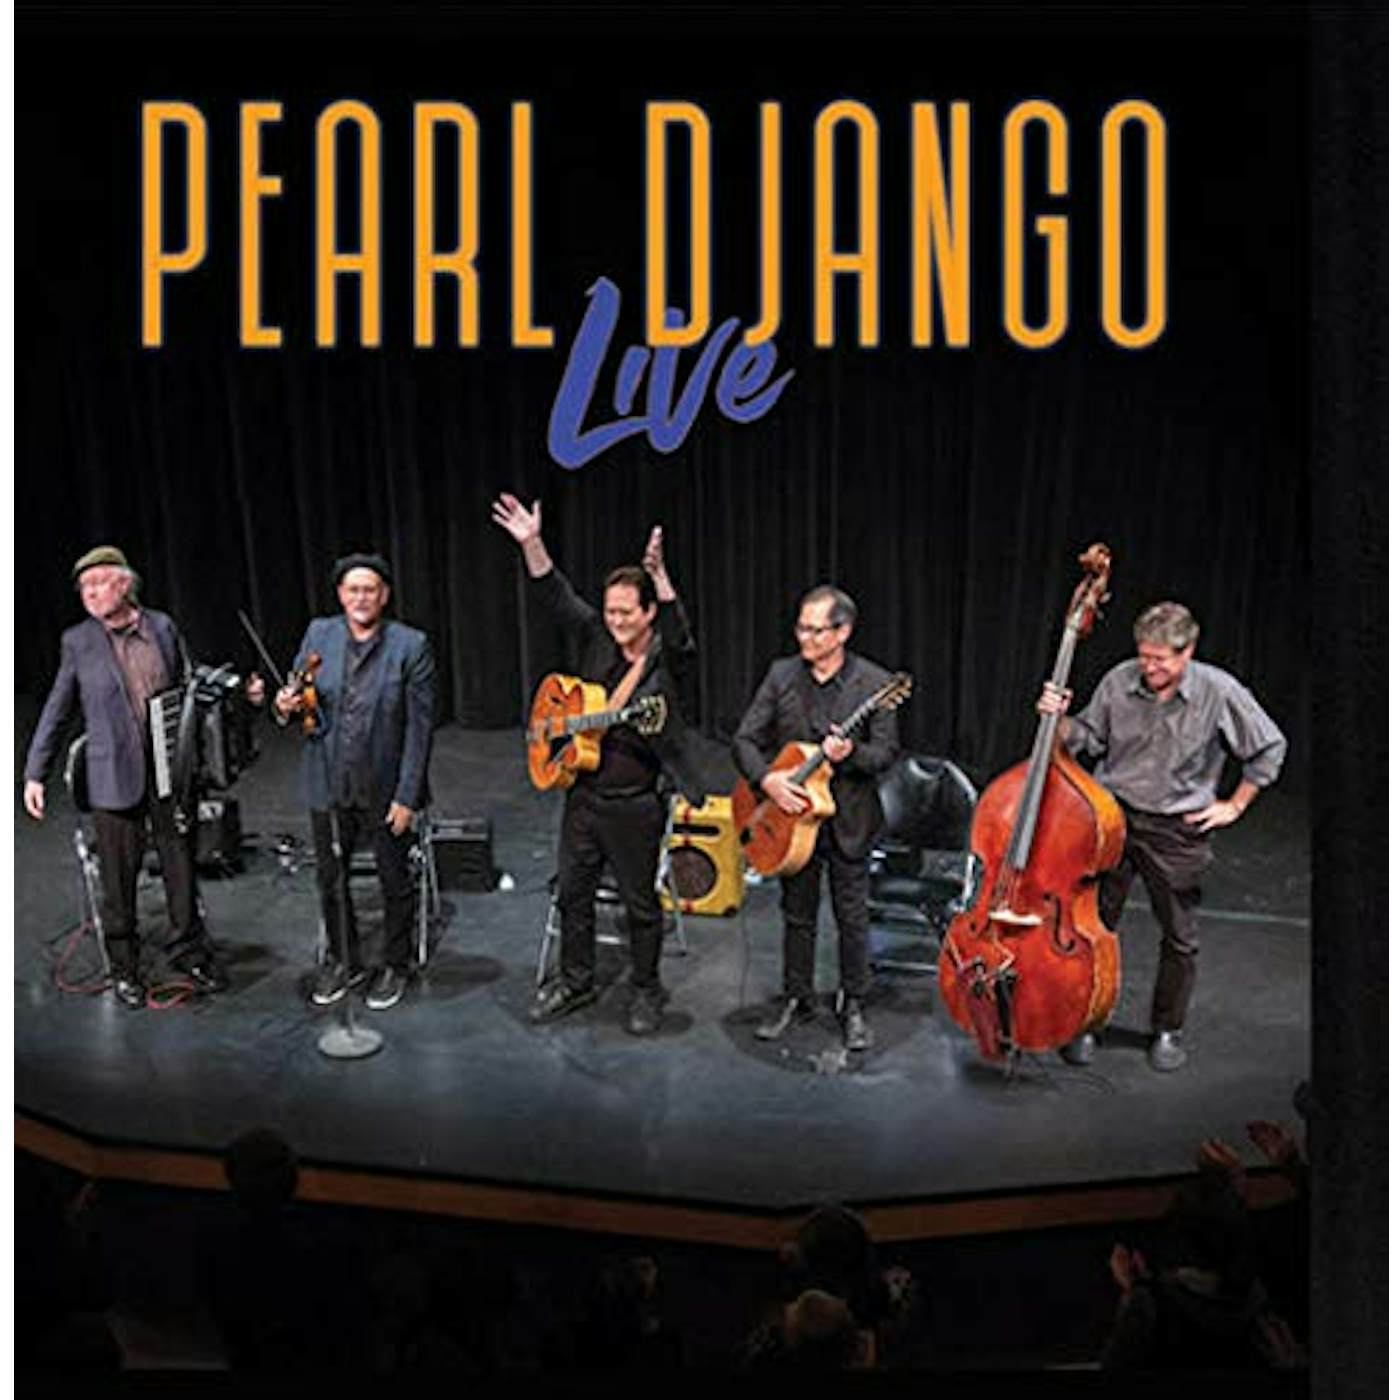 PEARL DJANGO LIVE CD